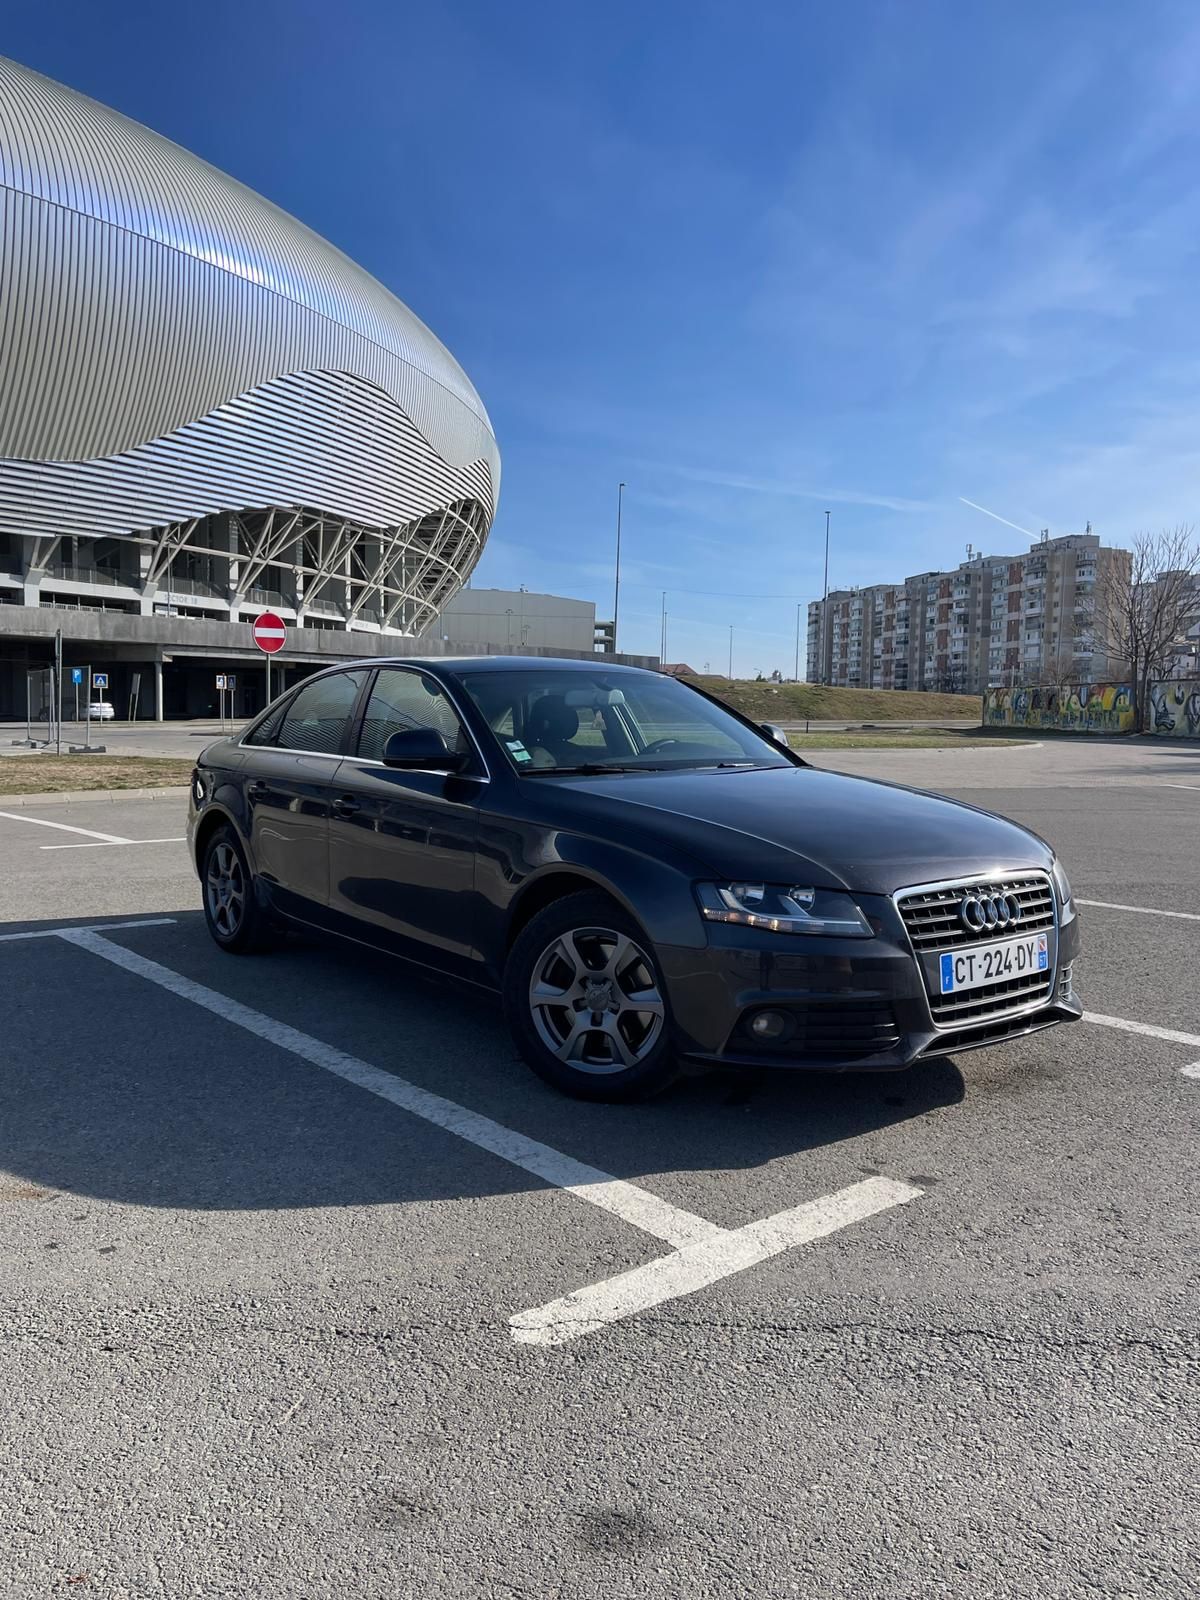 Audi a4 b8 diesel